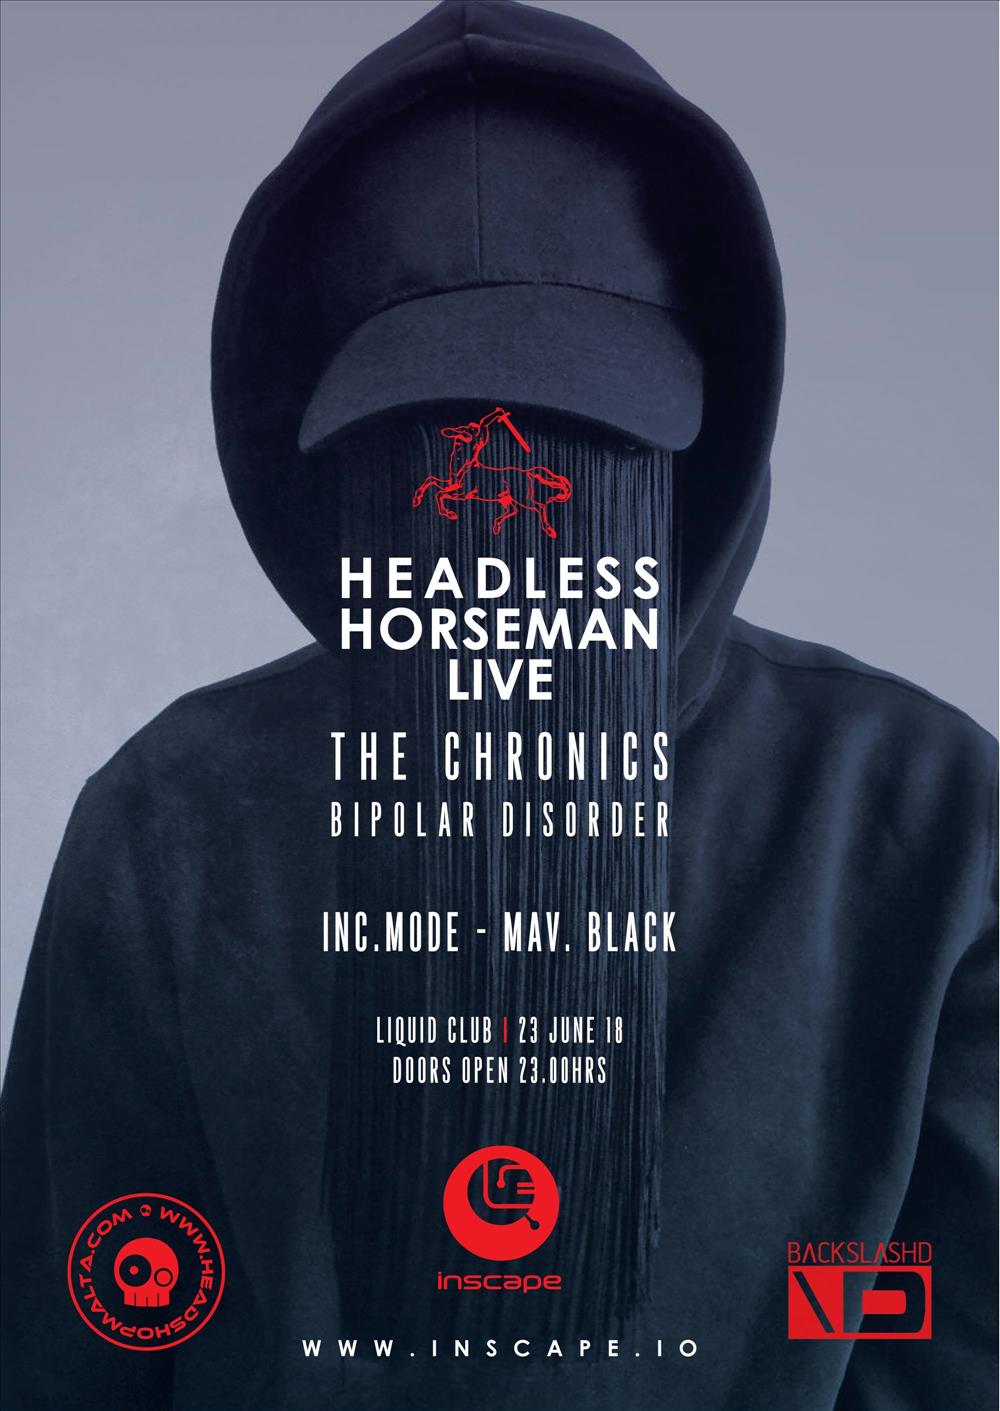 Inscape - Headless Horseman Live - The Chronics poster